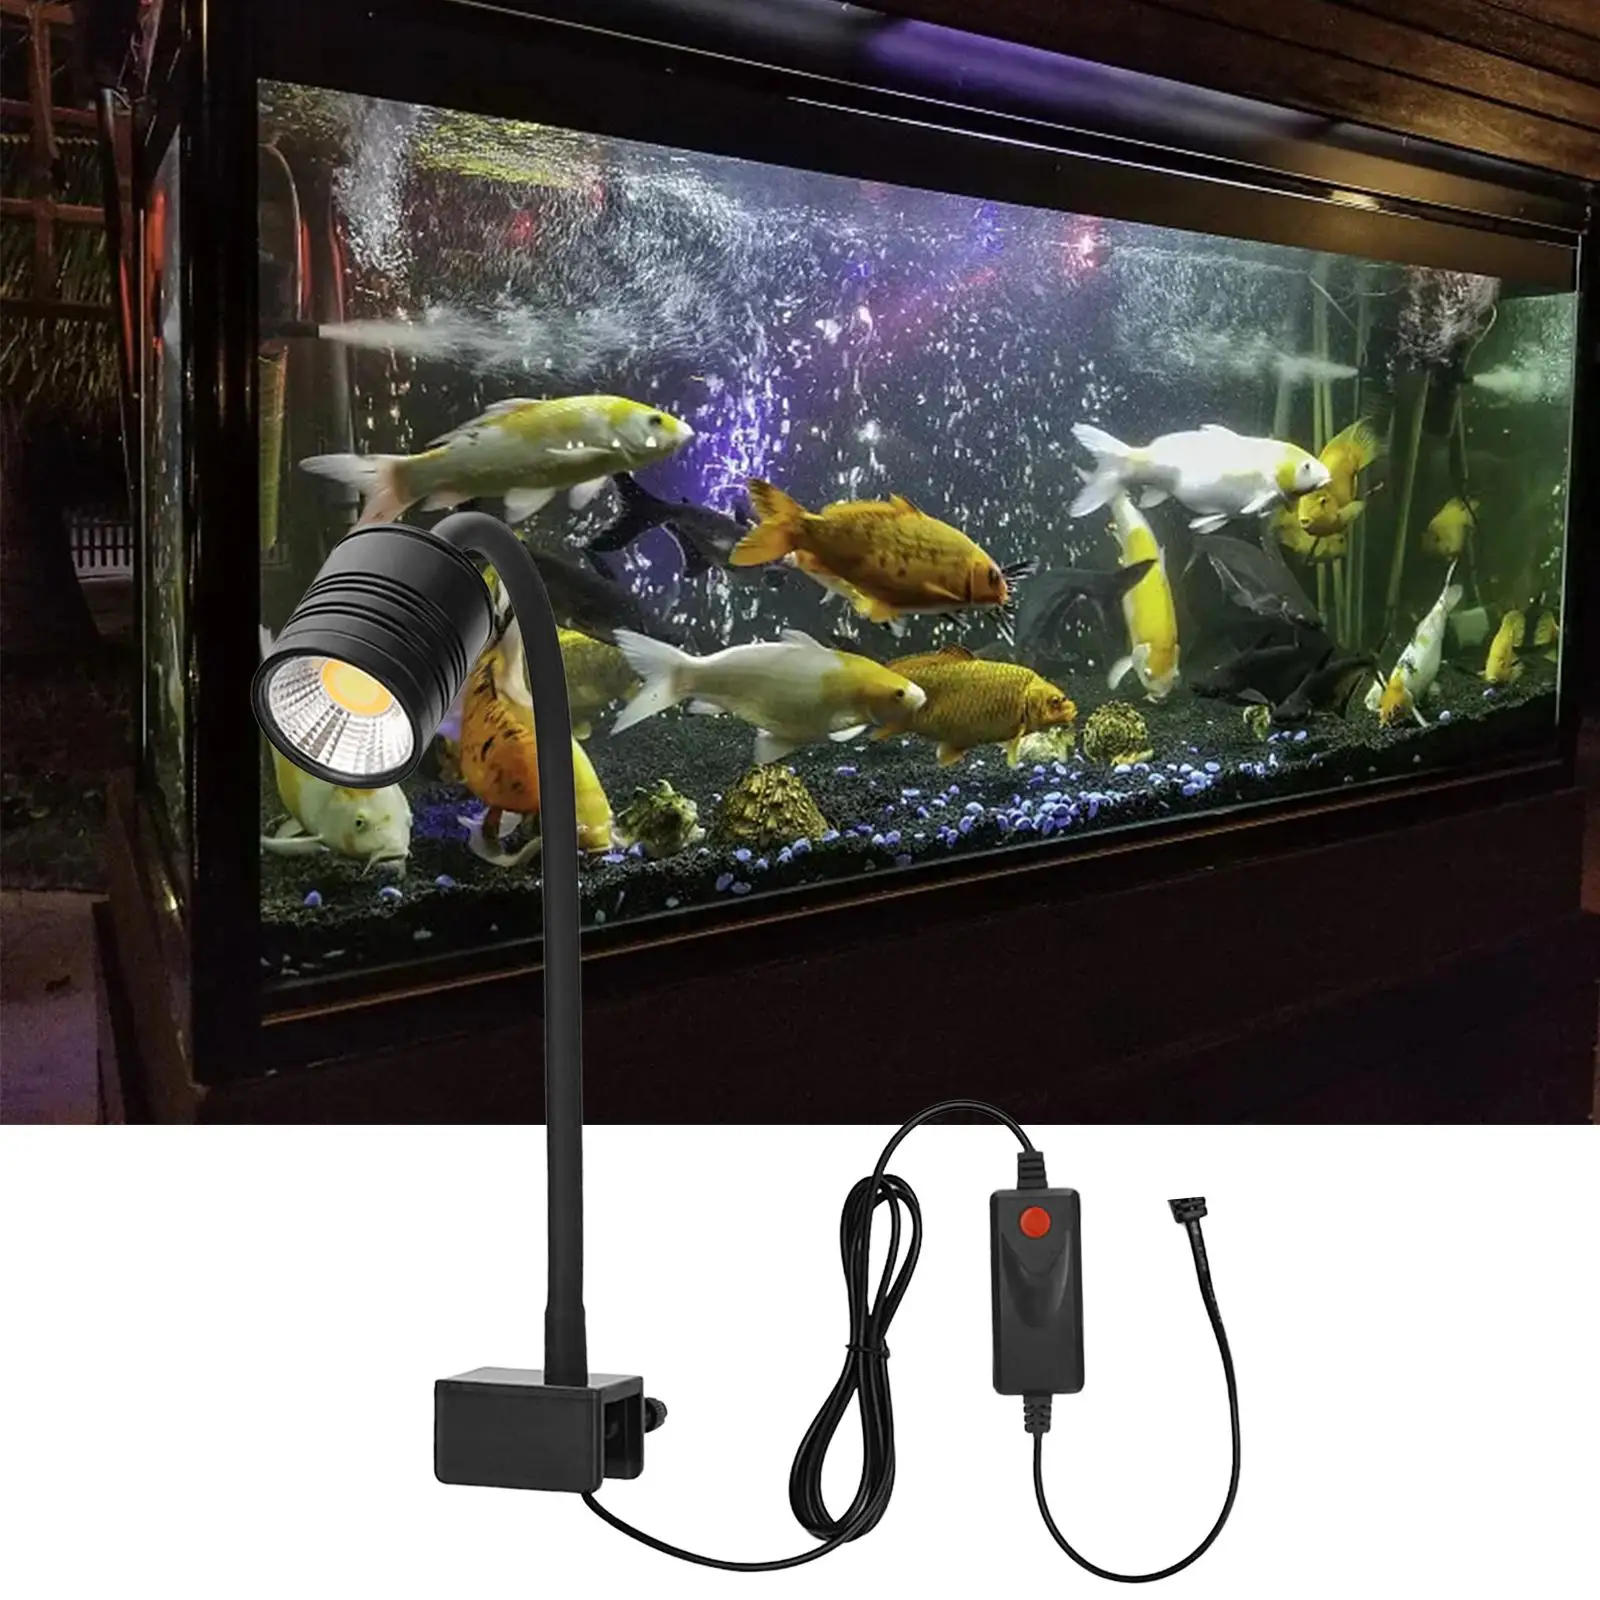 Aquarium LED Light Upgraded Clip on Compact 3 Colors Portable Sturdy Adjustable for Home Landscape Aquarium Landscaping Decor